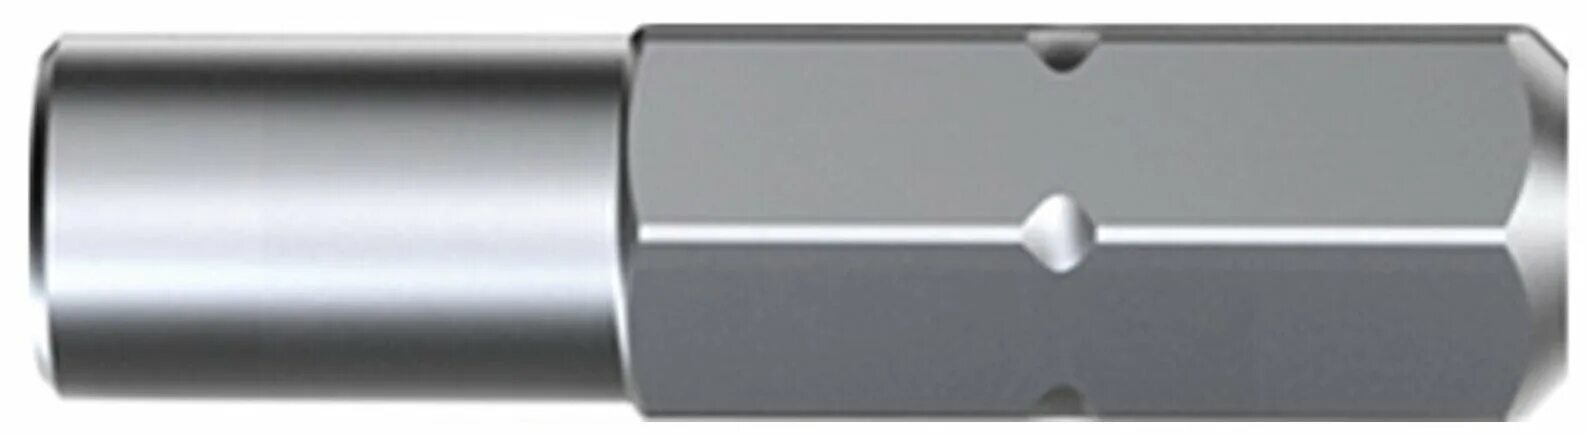 Биты микро. Переходник для бит с 6мм на 4мм Wiha. Адаптер microbit (4 мм) hex 1/4” (6,35 мм). Держатель бит 4 мм. Wiha адаптер 1/4.